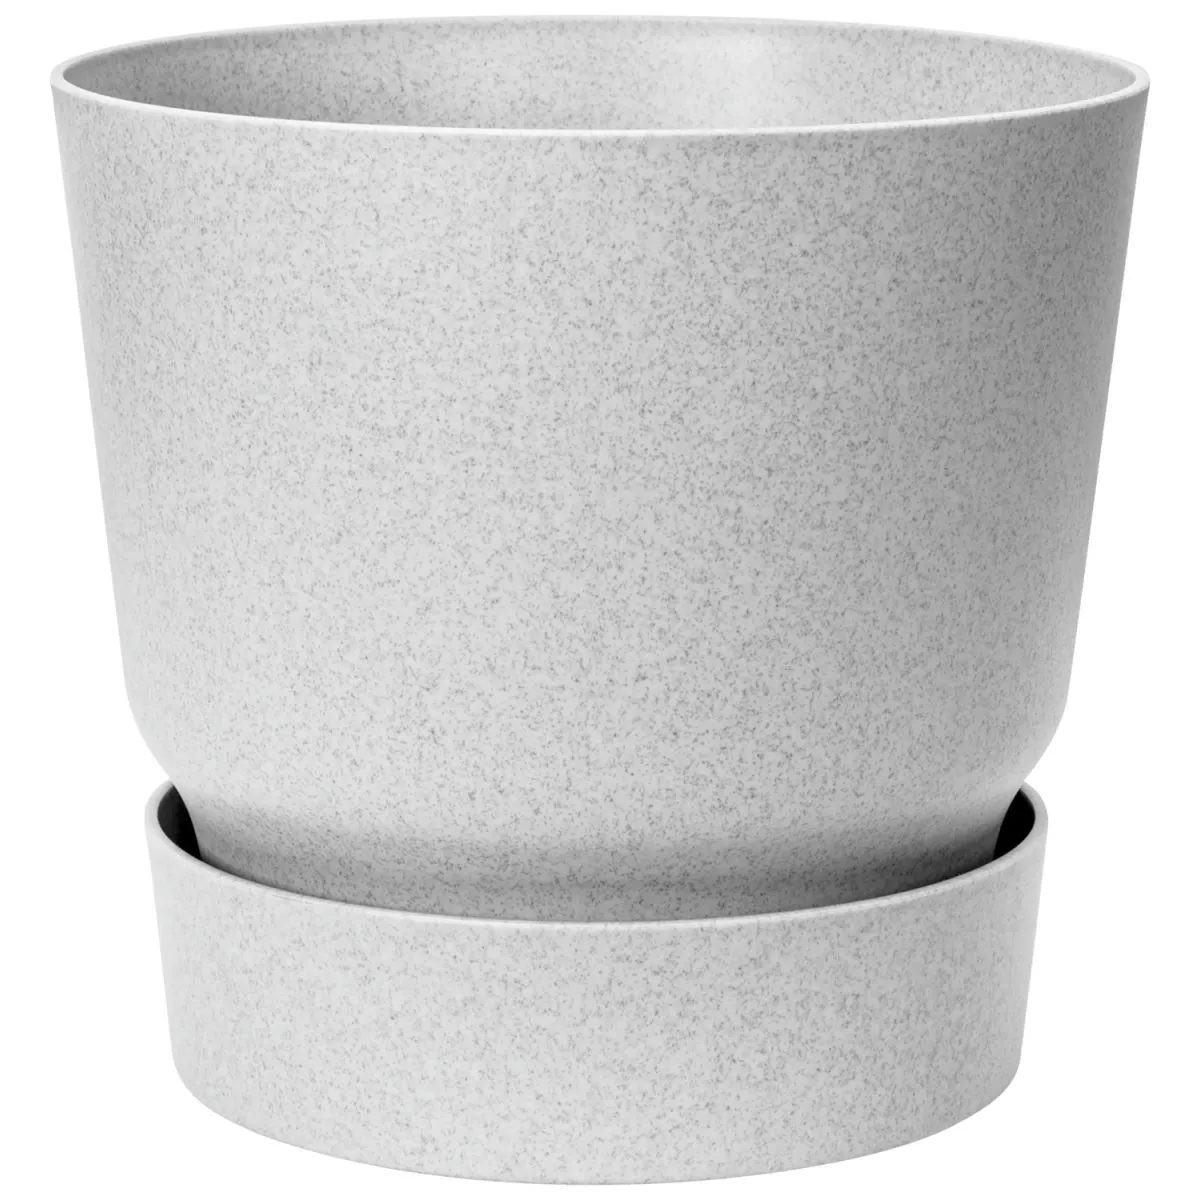 Vaso per piante Greenville elho; 47x44 cm (ØxH); cemento